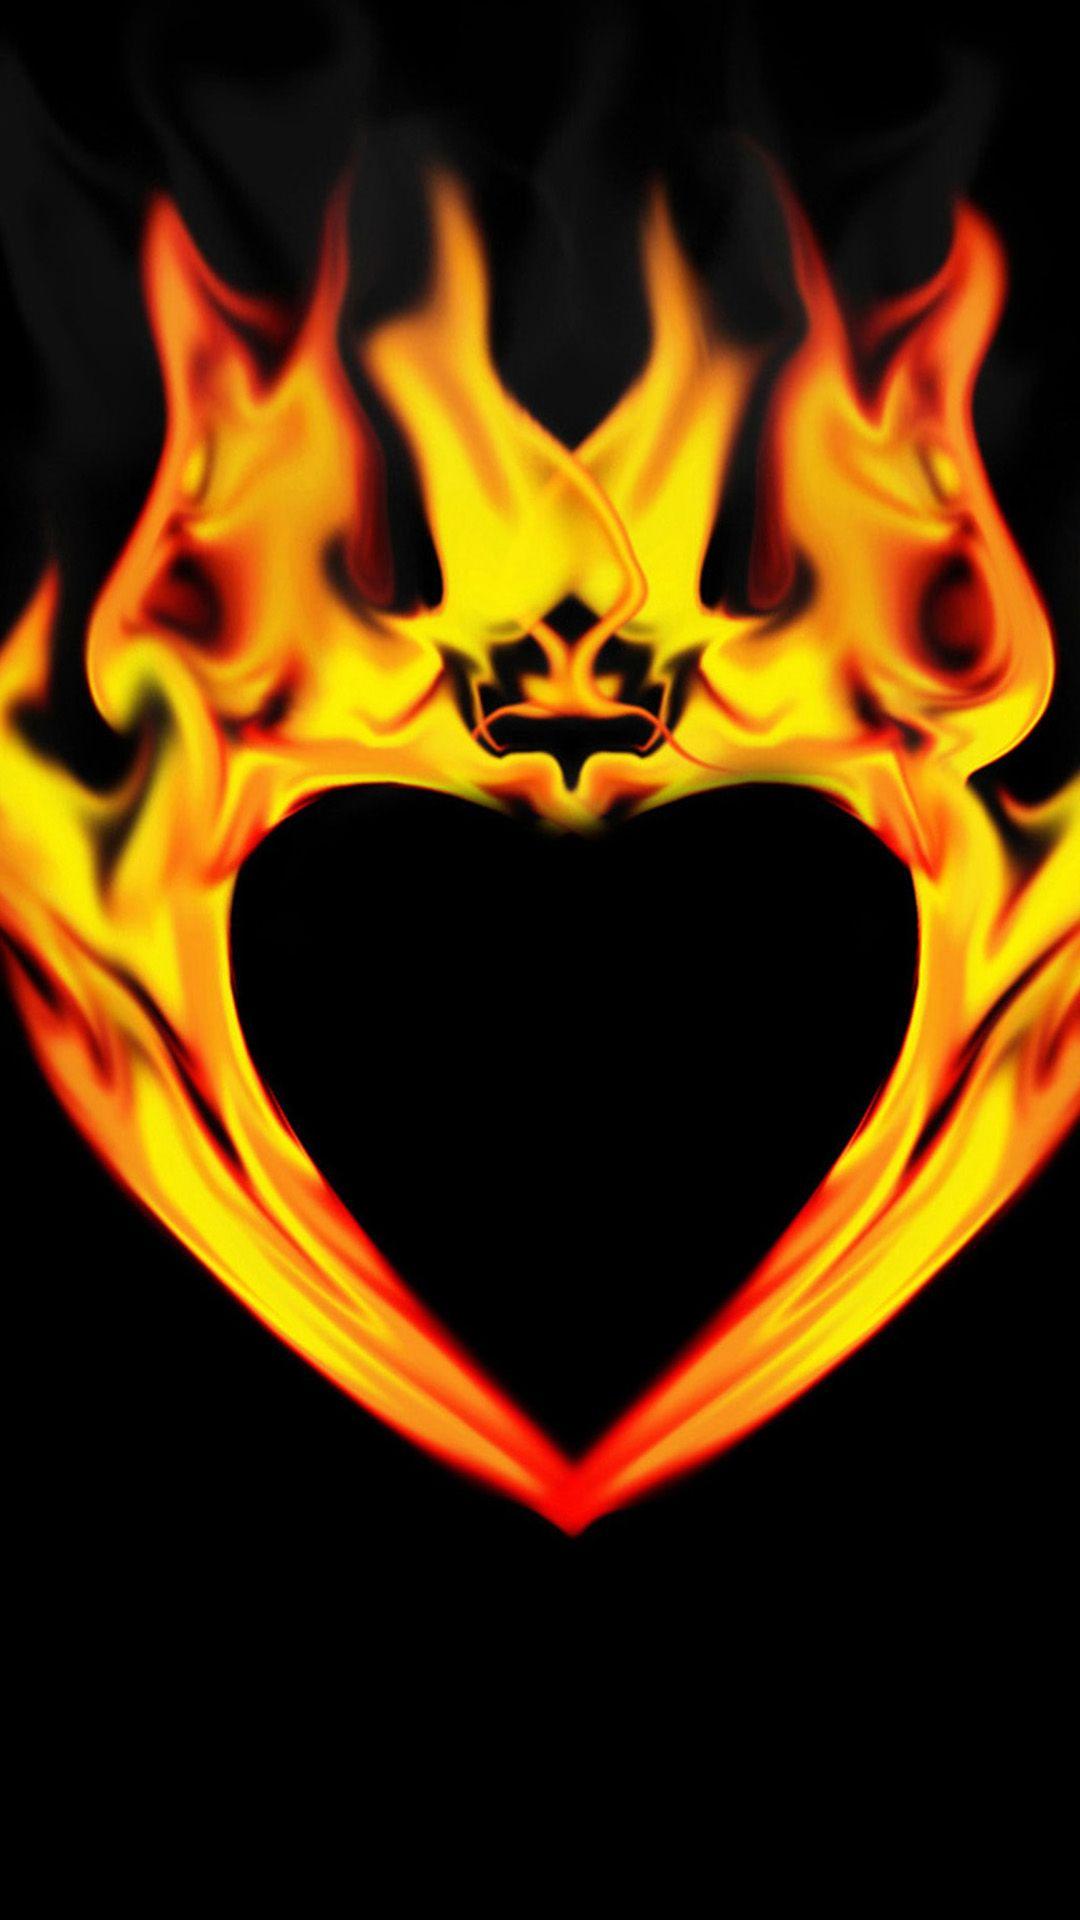 Heart of Fire Sony Xperia Z2 Wallpaper. Xperia Z2 Wallpaper